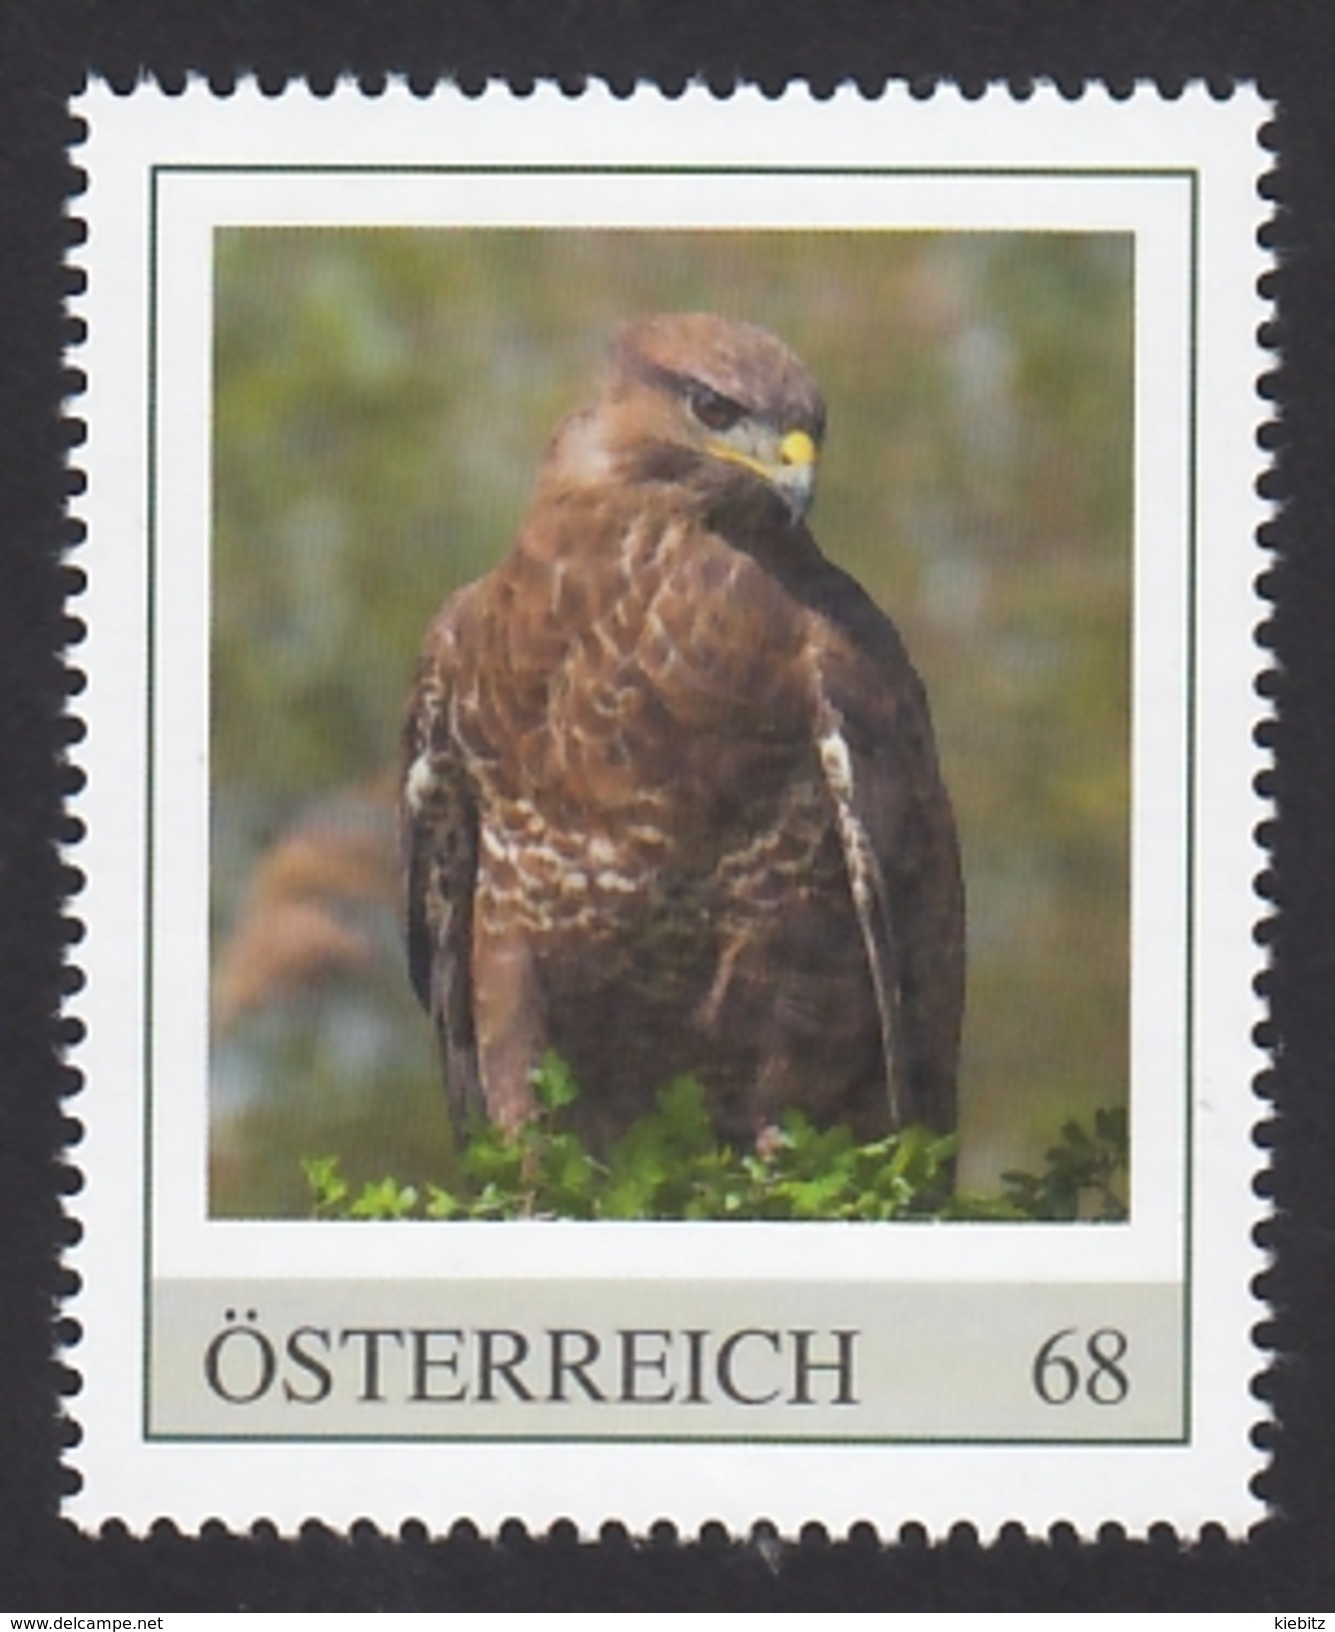 ÖSTERREICH 2015 ** Mäusebussard / Buteo Buteo - PM Personalized Stamp MNH - Aquile & Rapaci Diurni